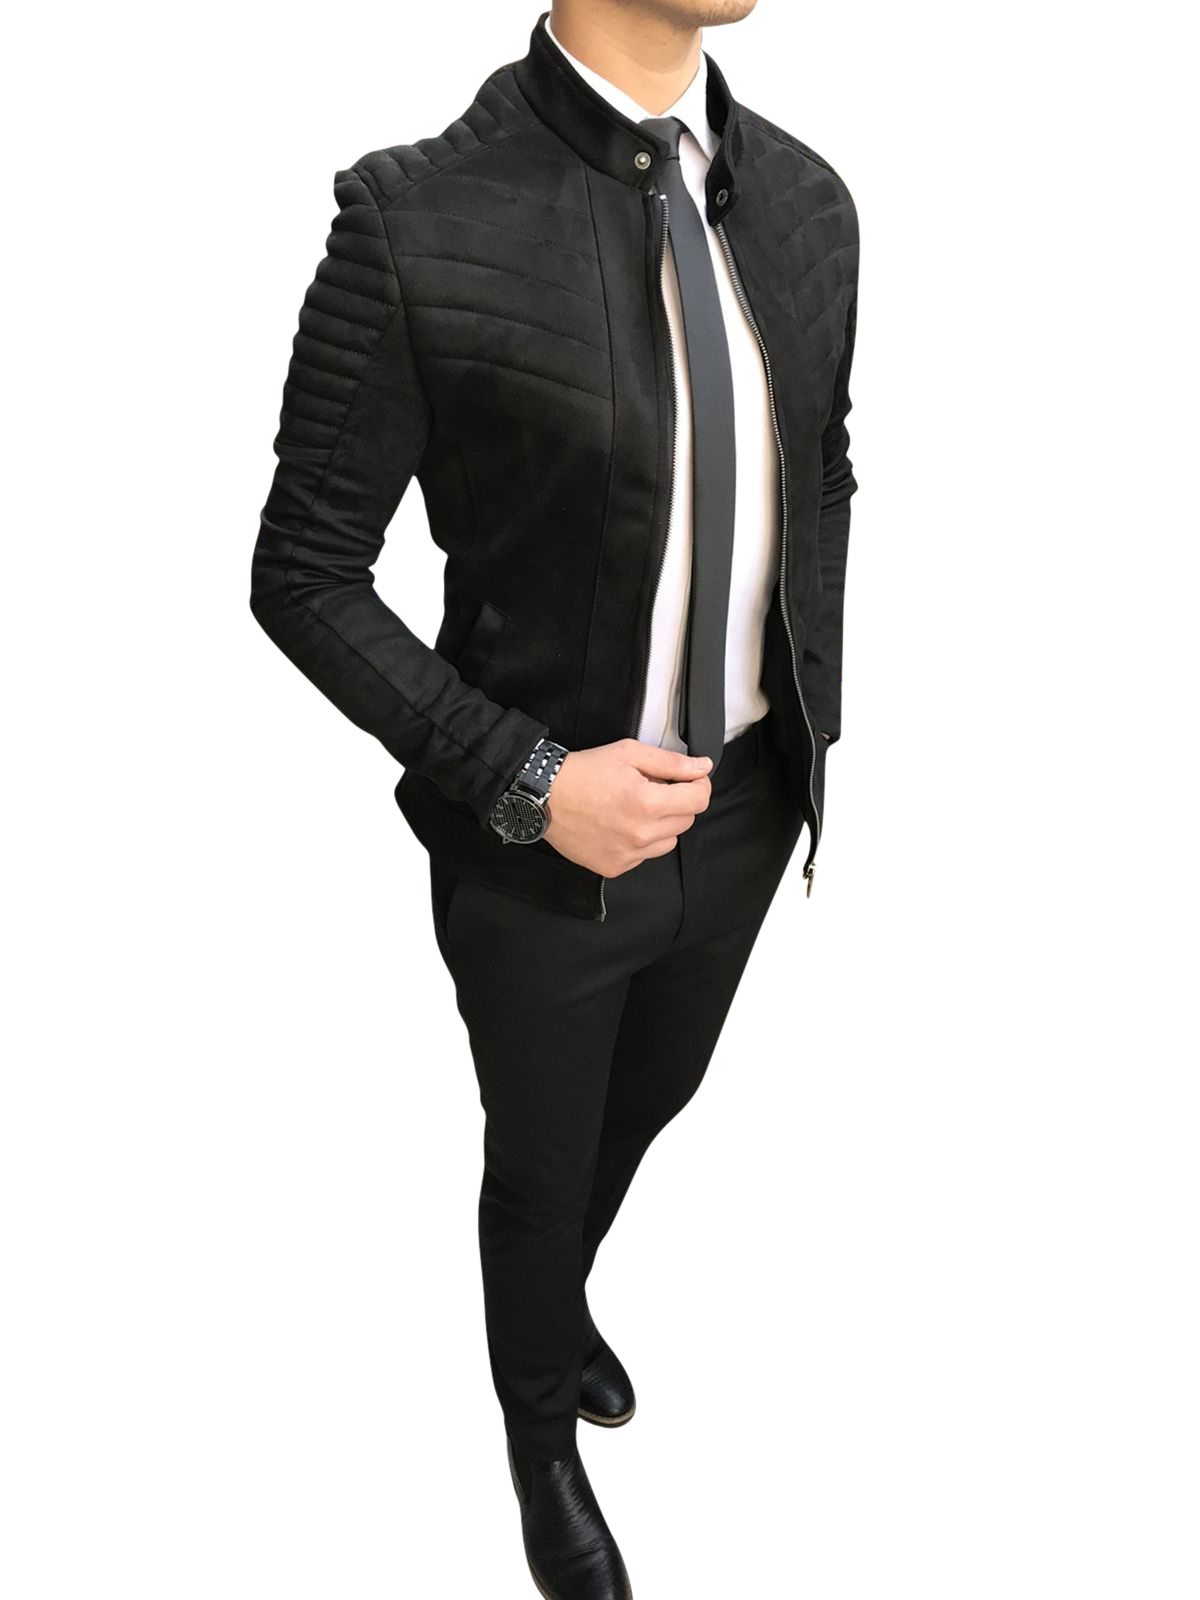 İtalyan stil içi kürklü erkek siyah süet mont ceket T2887